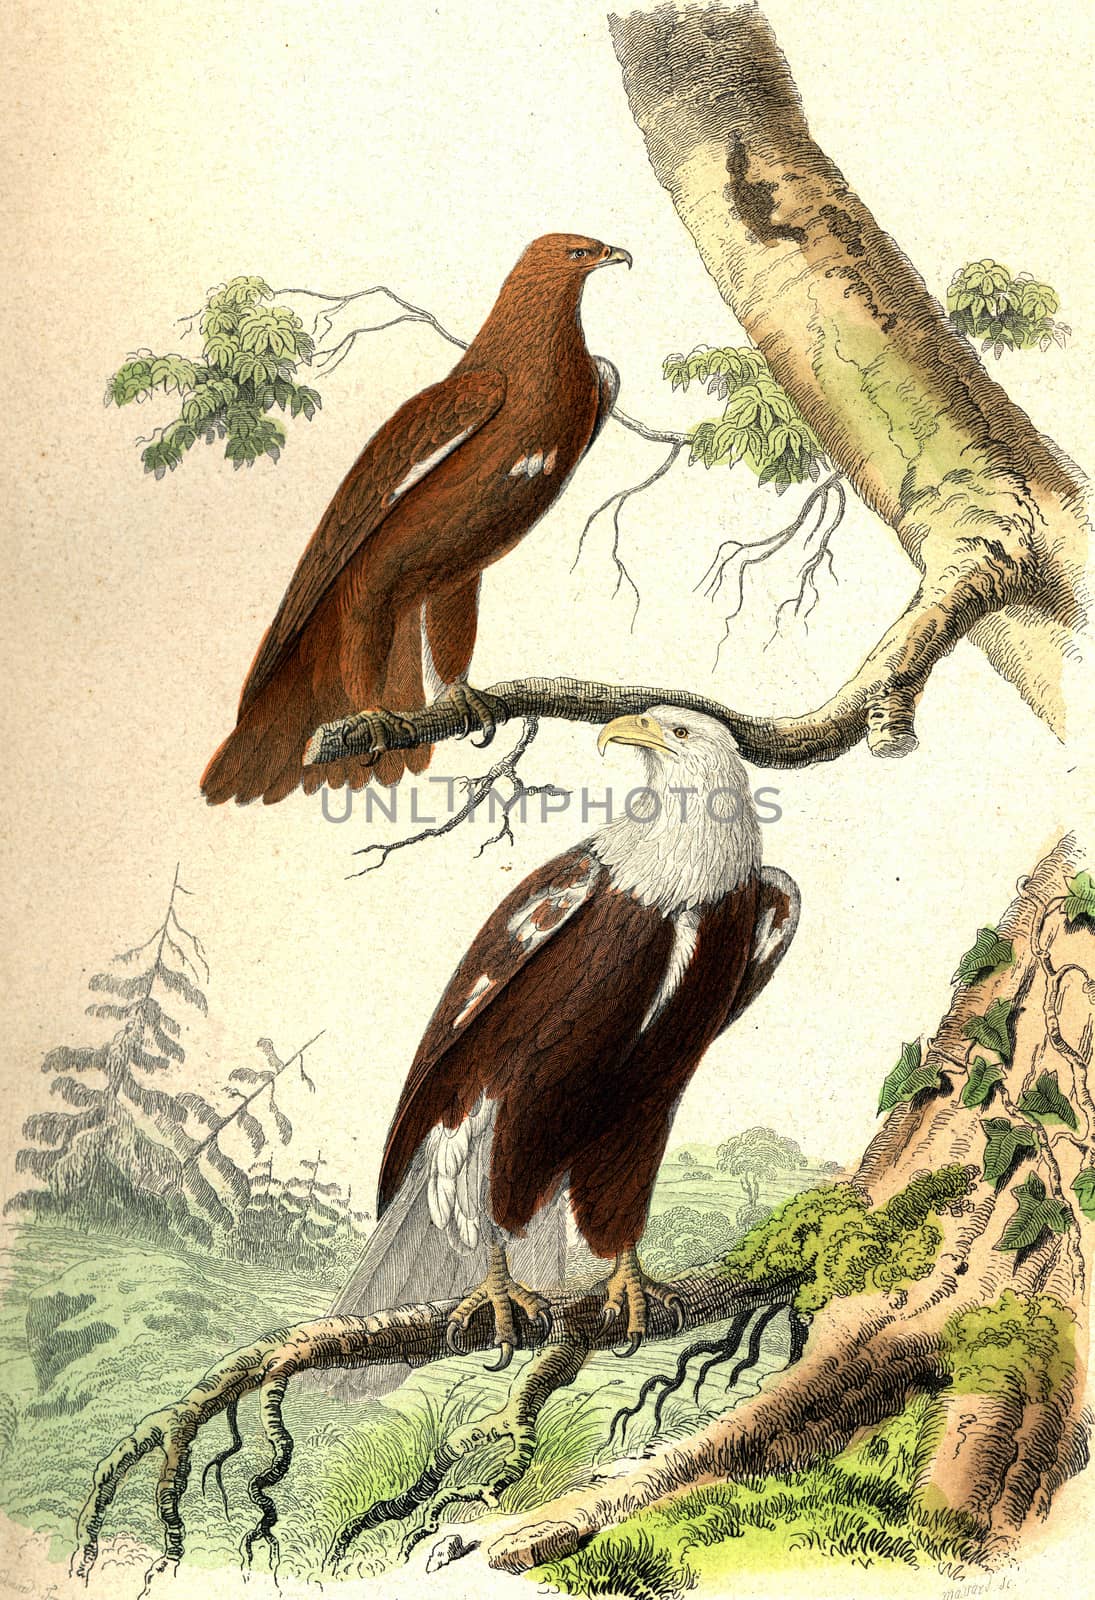 The Little Eagle or Eagle Screaming, The Eagle, vintage engravin by Morphart